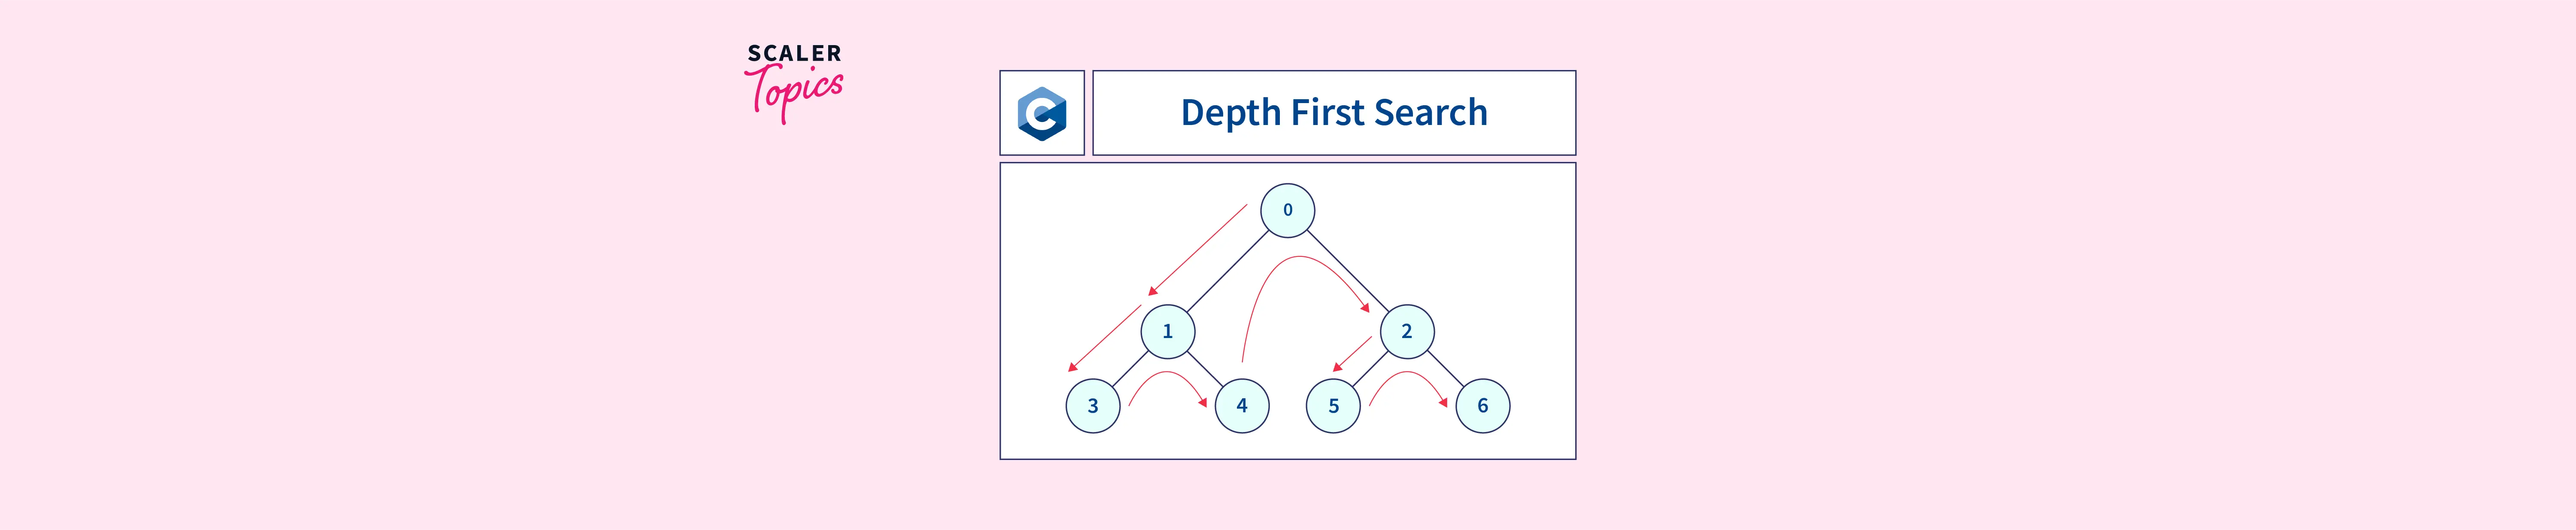 Depth First Search (DFS) Algorithm - Scaler Topics